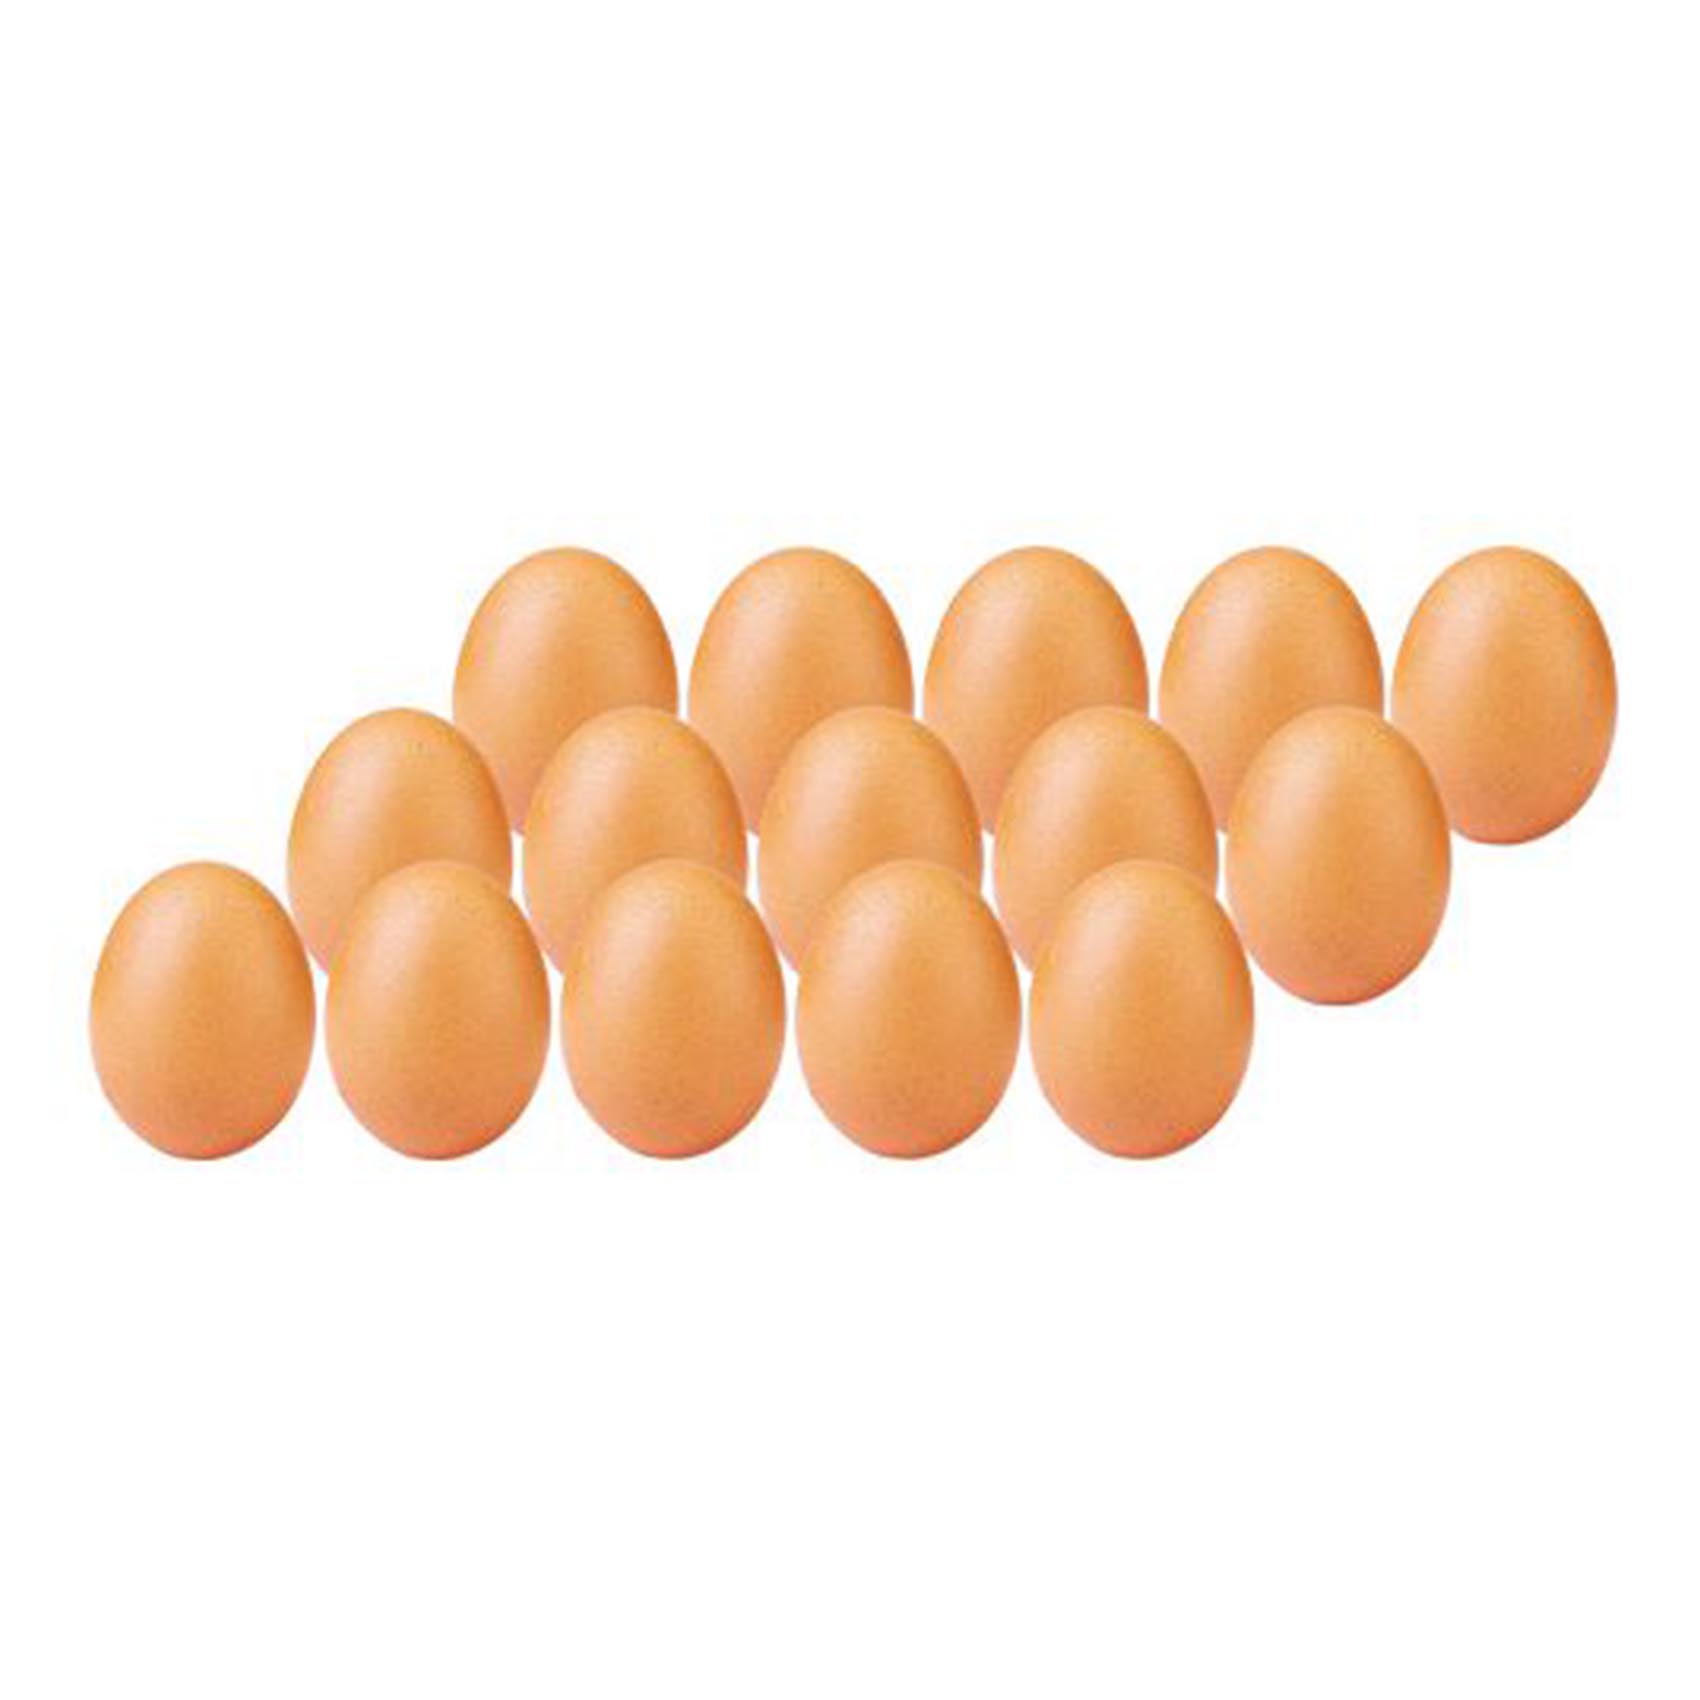 The Good Diet Eggs X 15 Pieces